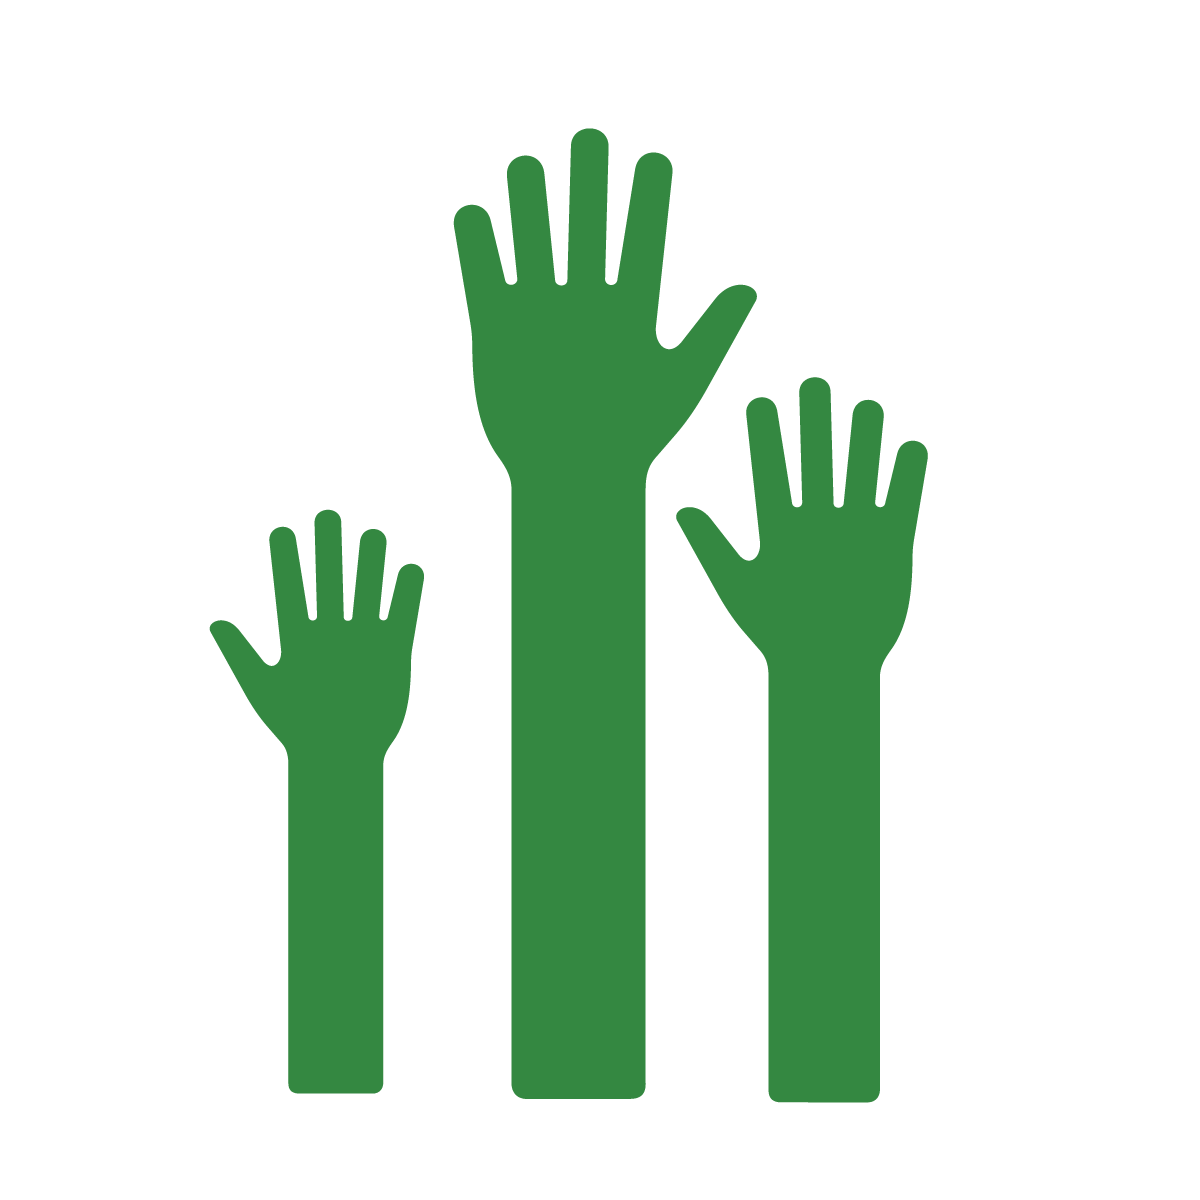 Icon of hands raised upwards